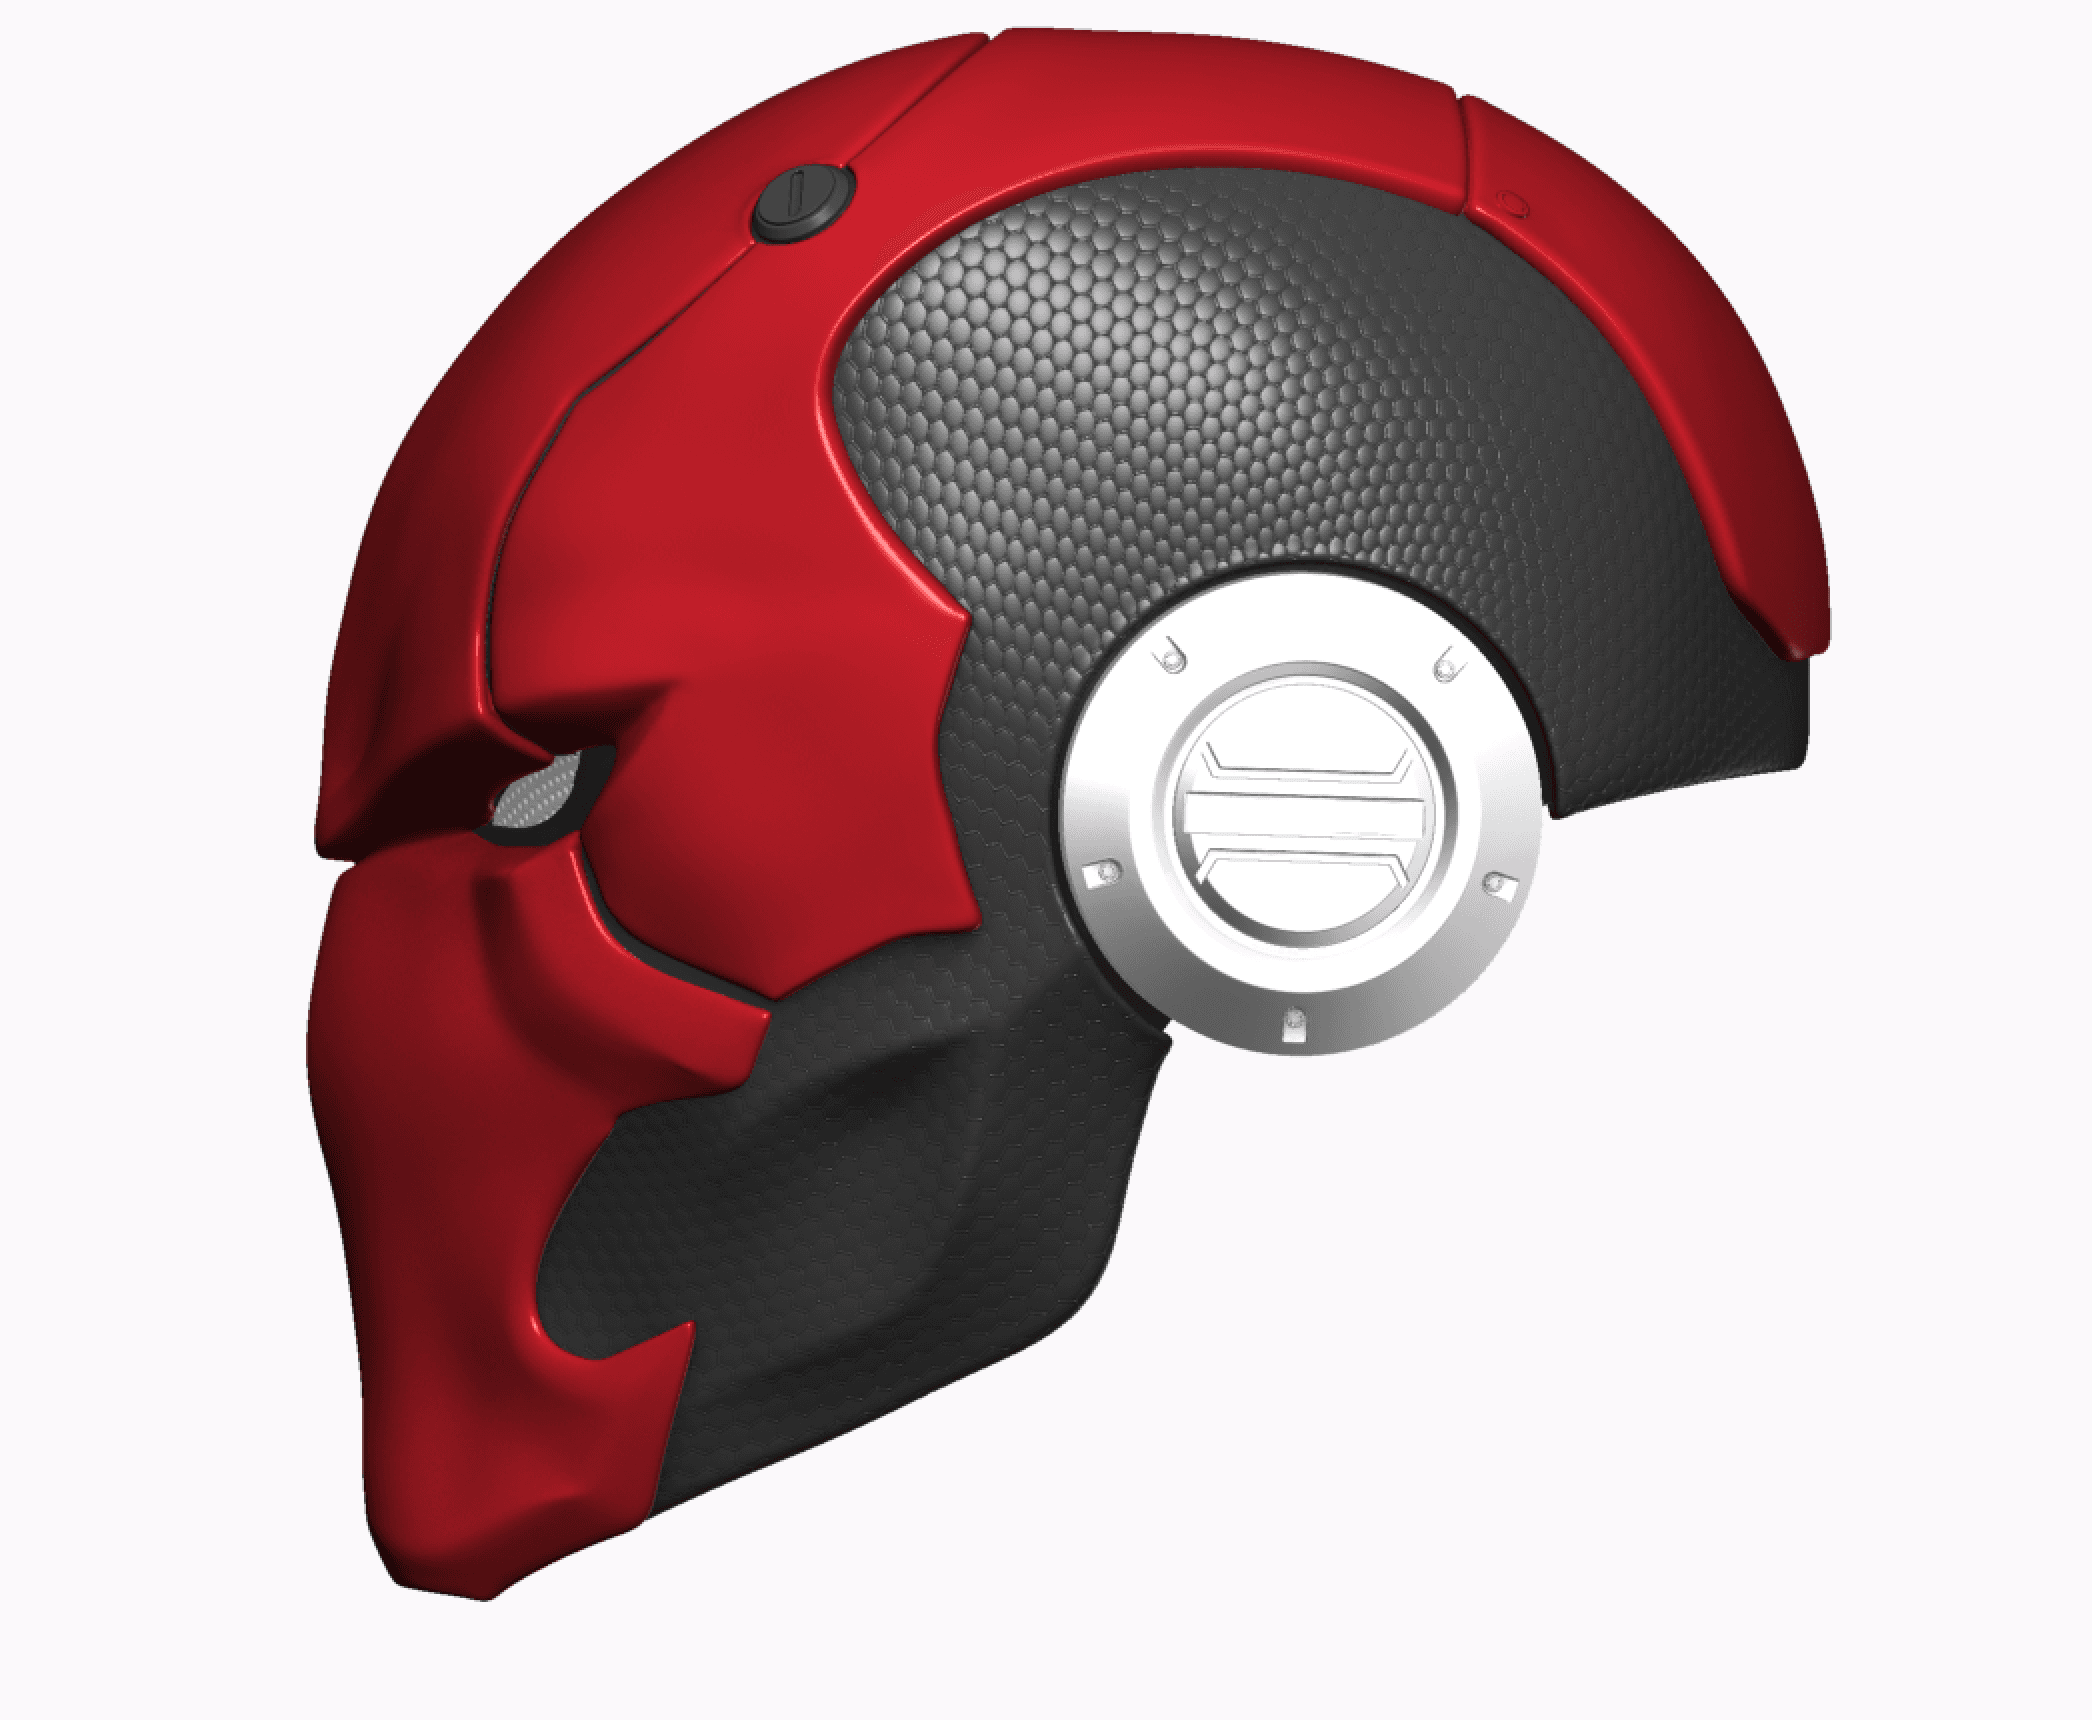 Red Ronin Red Hood Mask 3d model